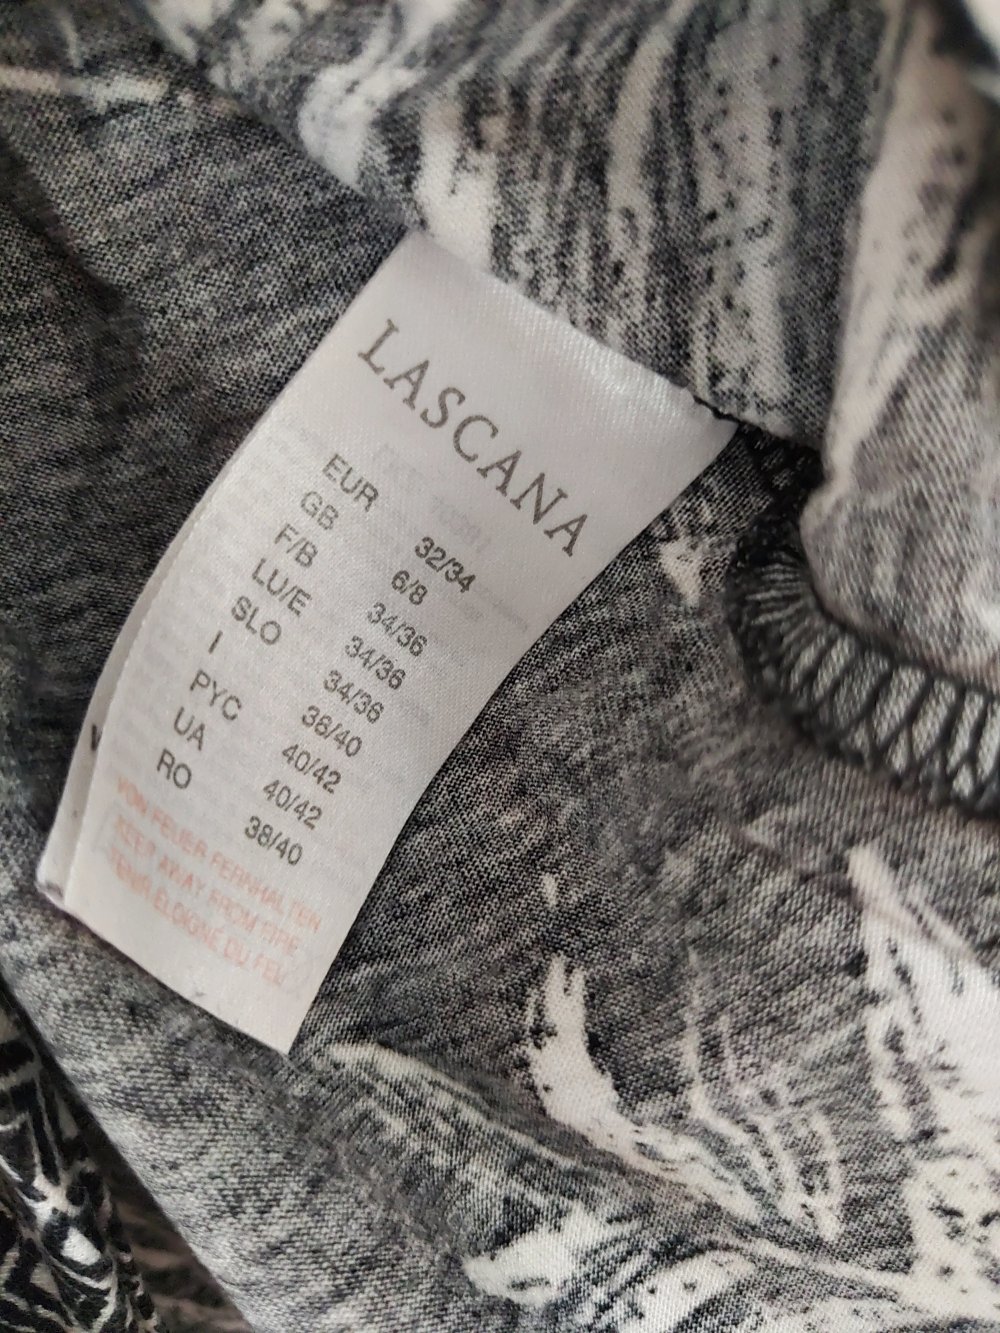 Nachthemd - Lascana - 32/34 - S - Blätter - Nacht Wäsche